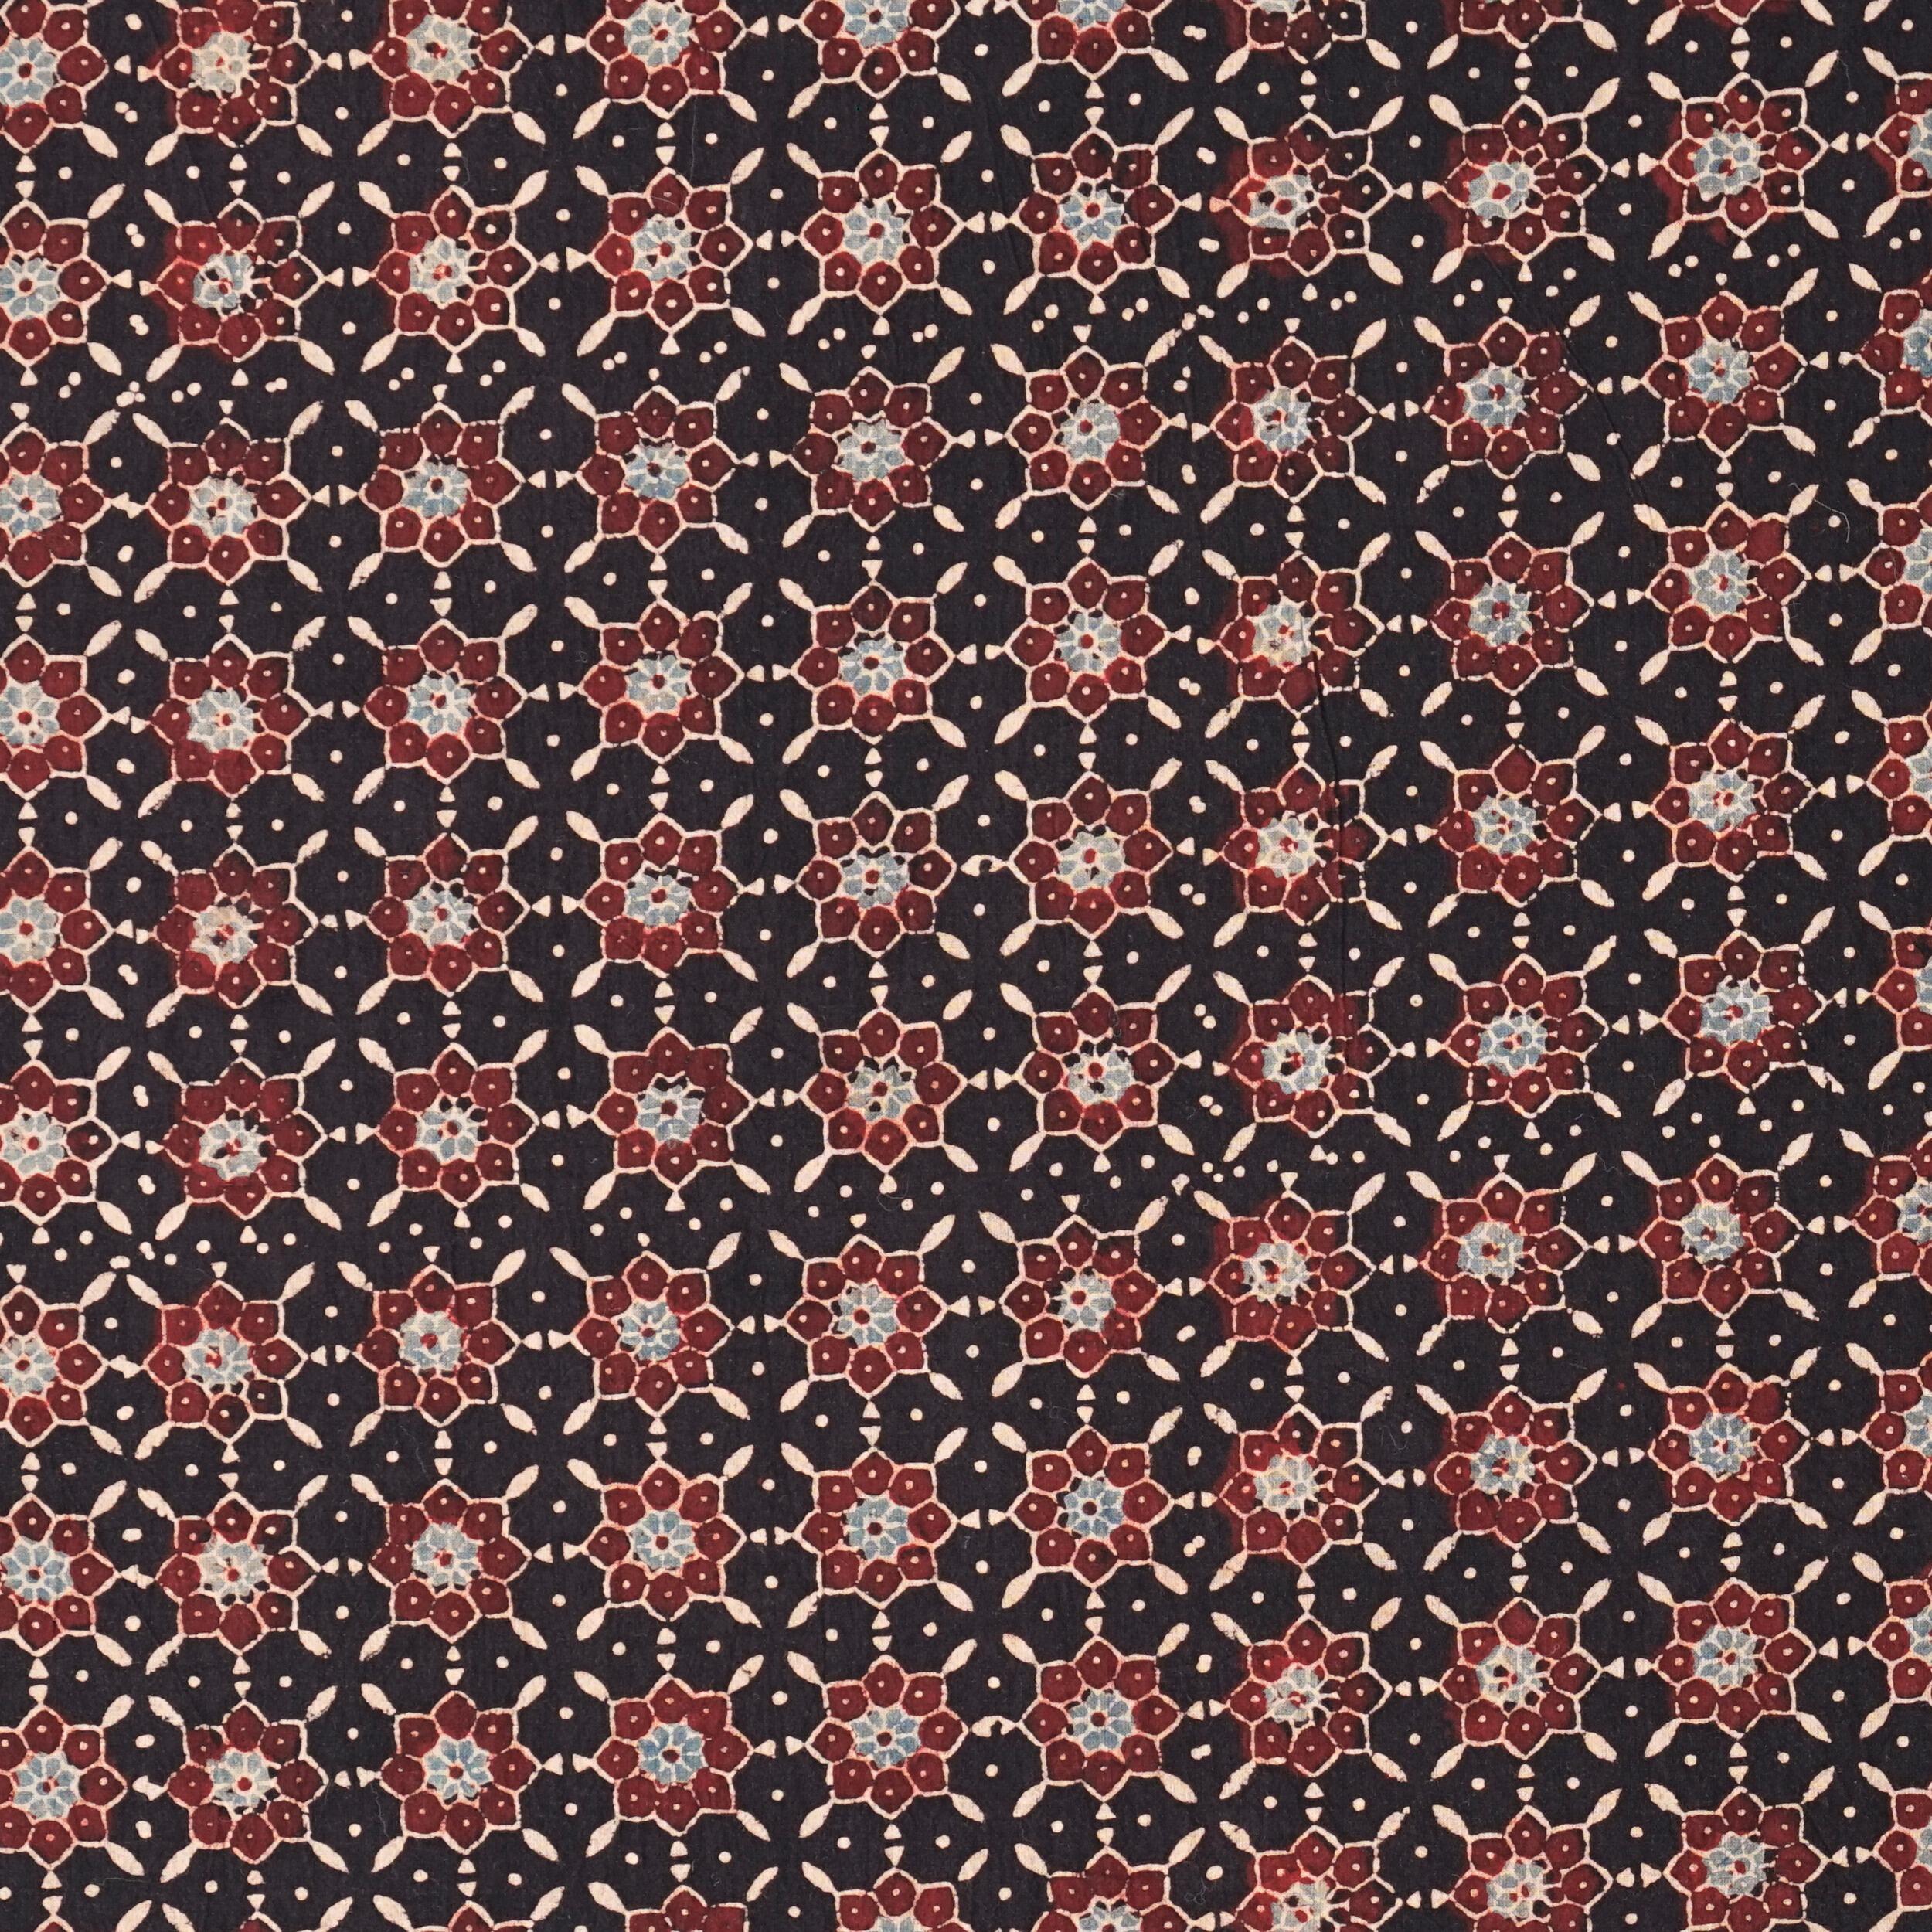 Ajrak Block-Printed Cotton - Starburst Print - Iron Black, Alizarin Red, Indigo - Flat